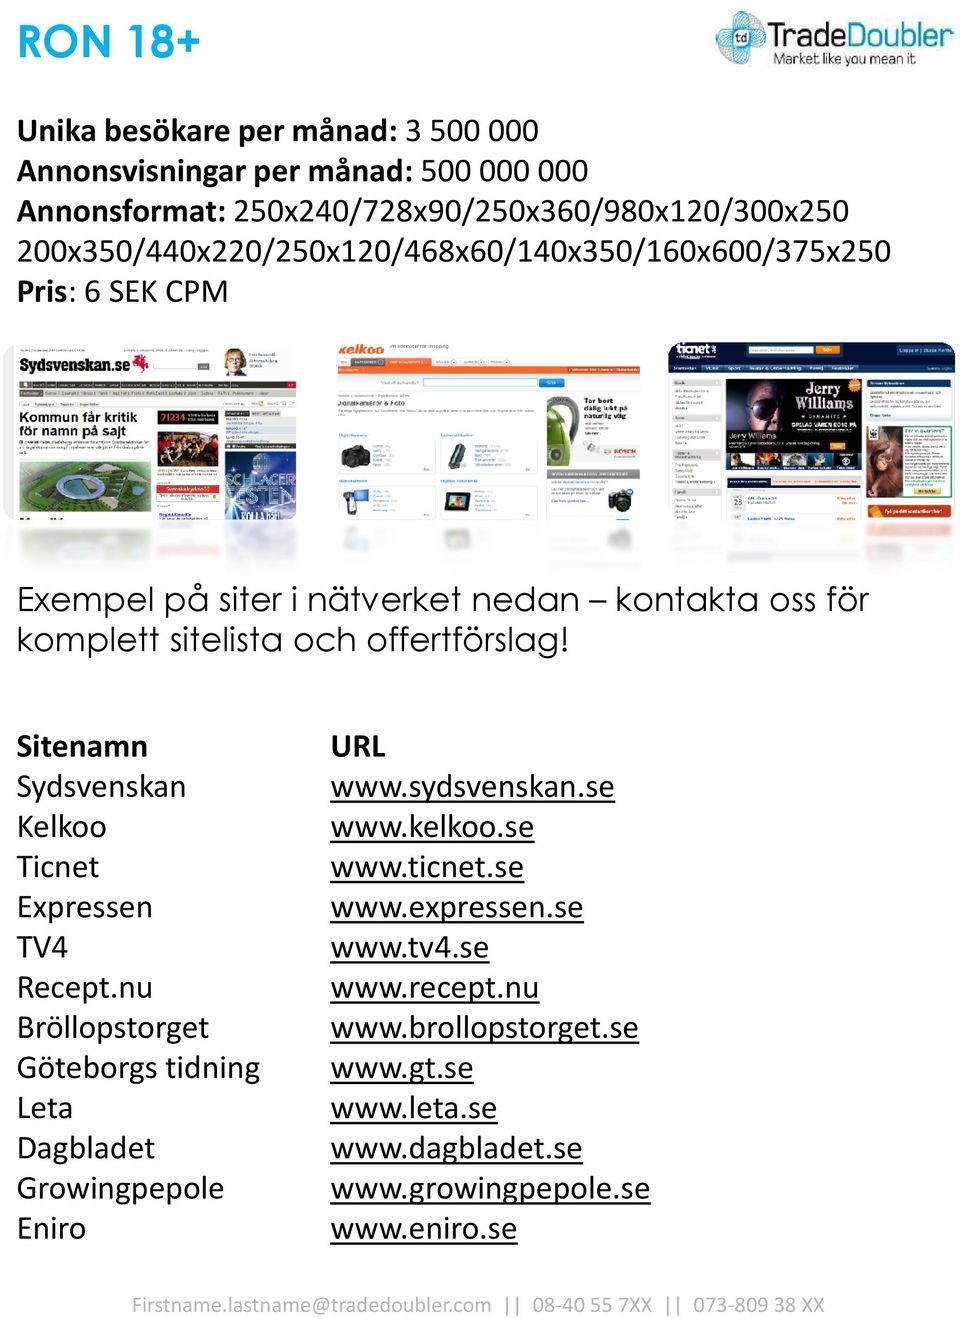 Kelkoo Ticnet Expressen TV4 Recept.nu Bröllopstorget Göteborgs tidning Leta Dagbladet Growingpepole Eniro www.sydsvenskan.se www.kelkoo.